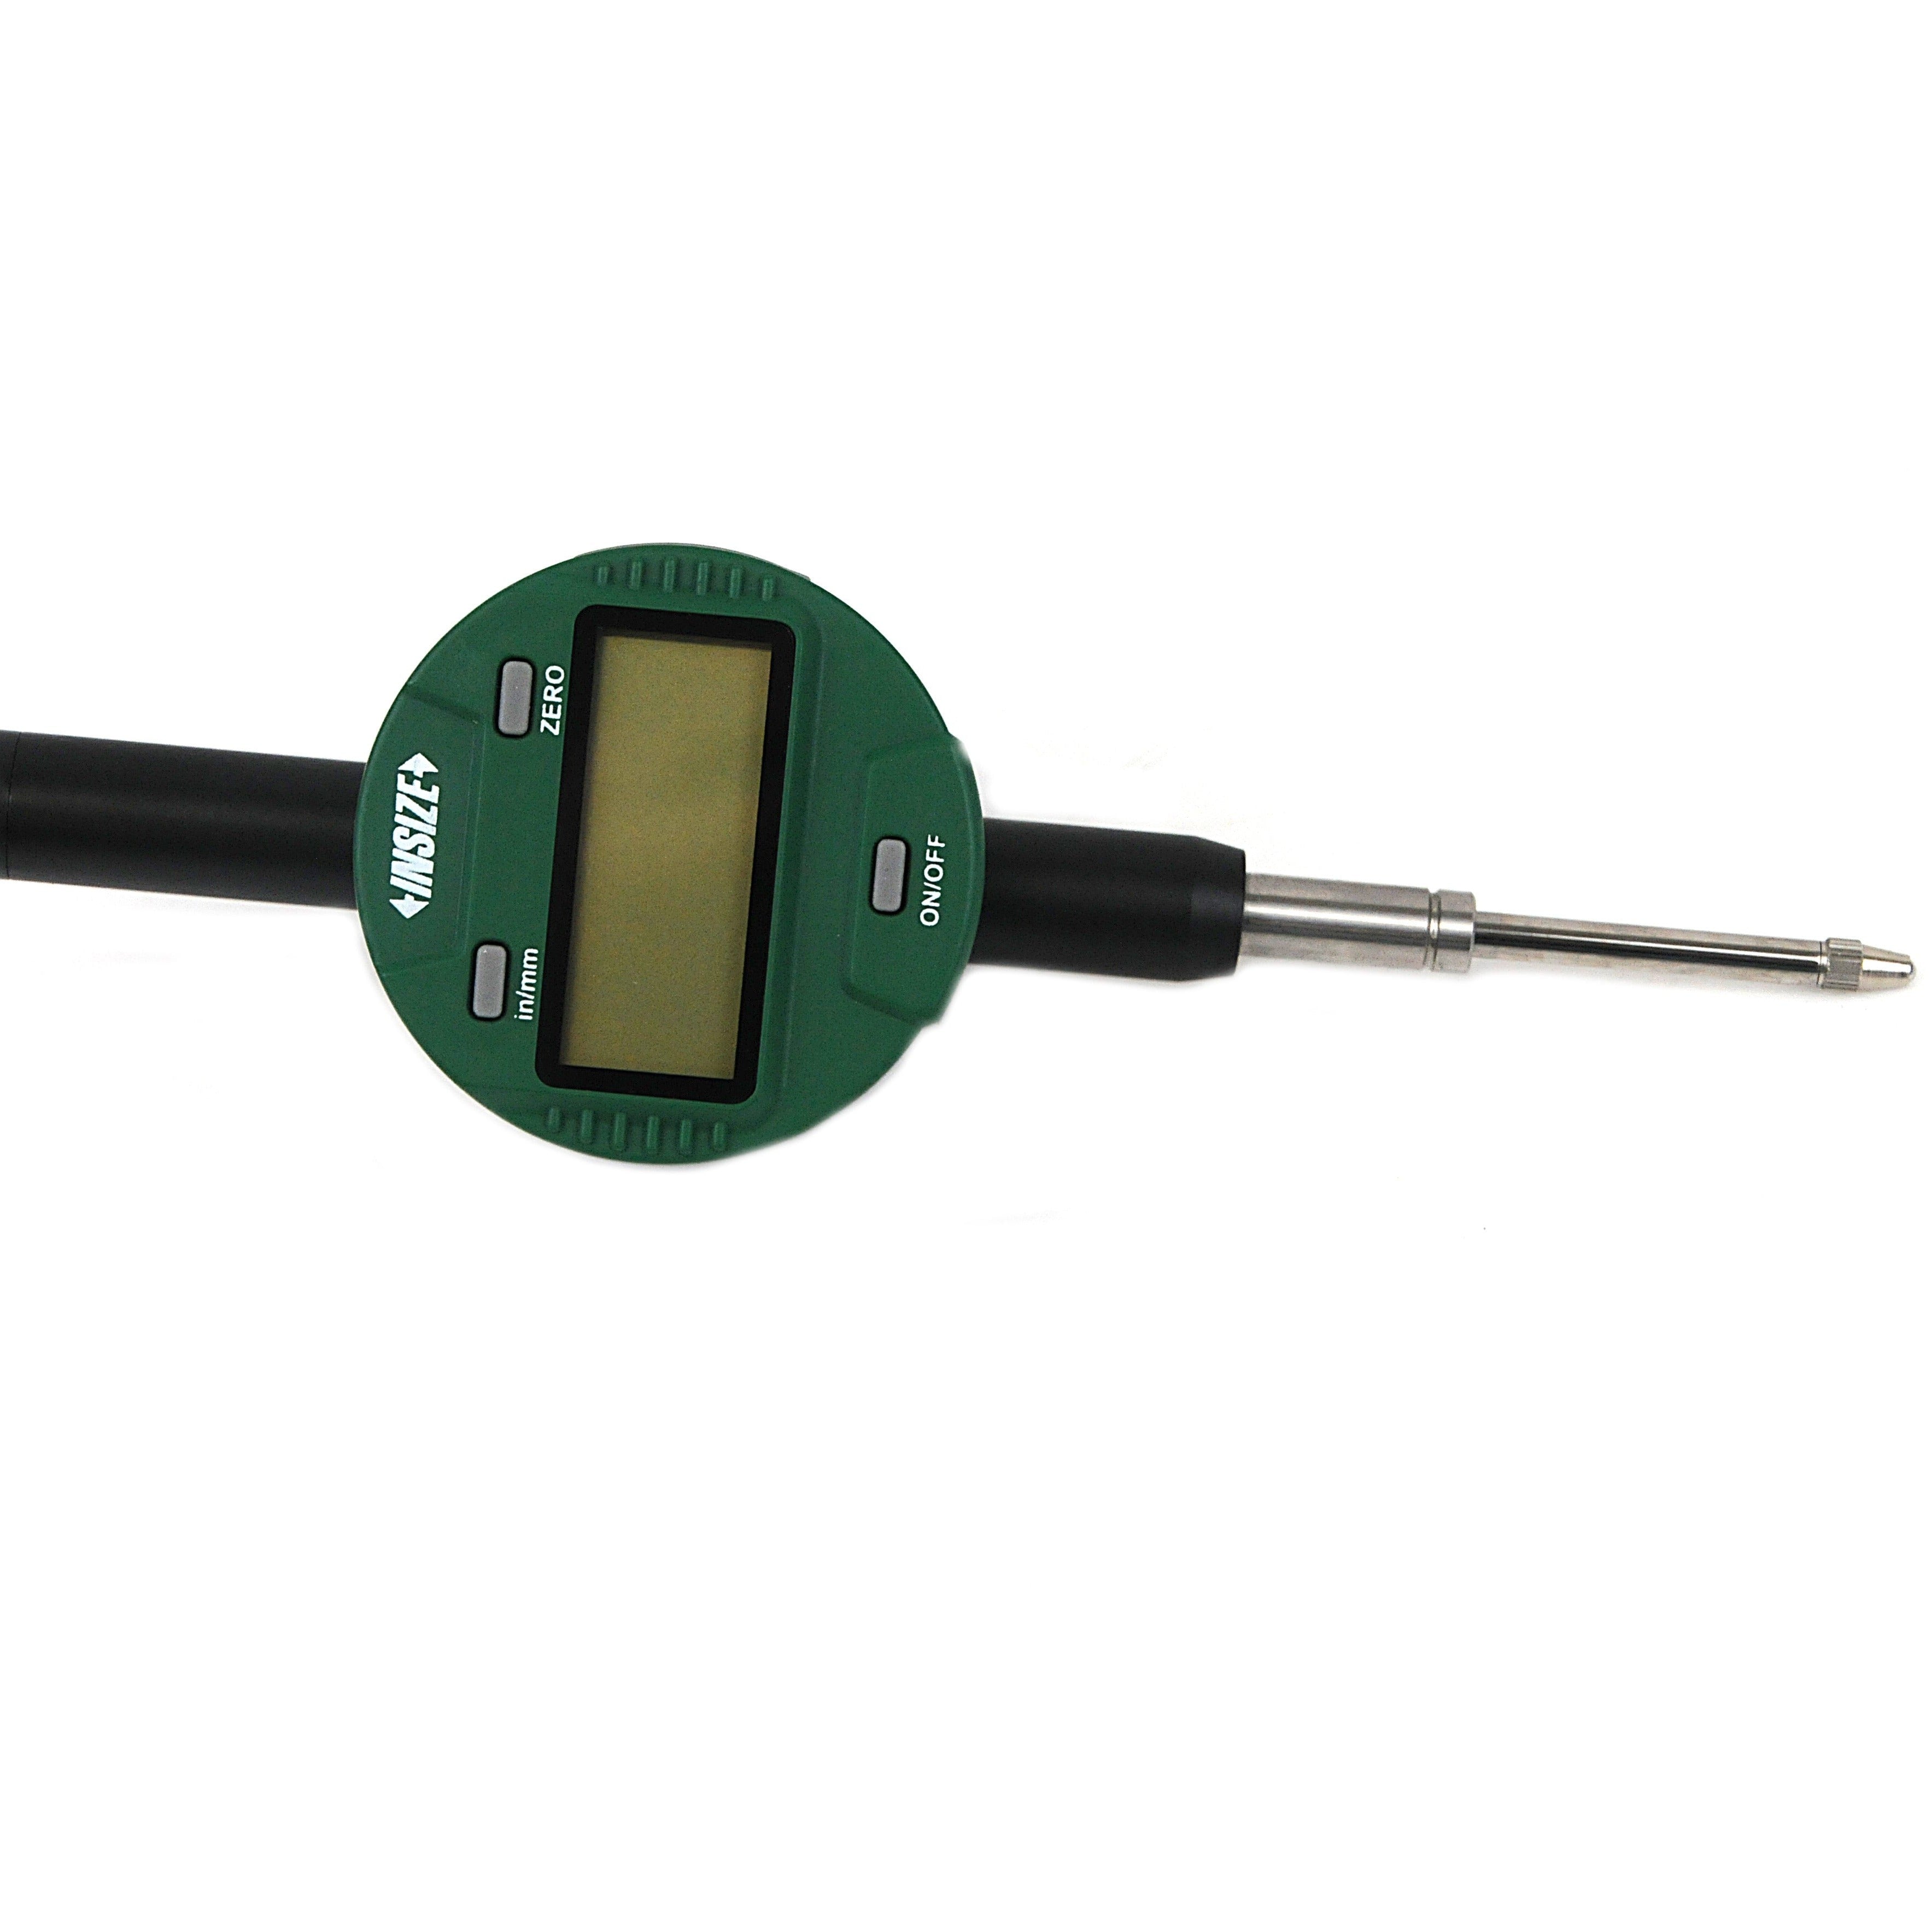 Insize Digital Indicator 25.4mm/1" Range Series 2112-251